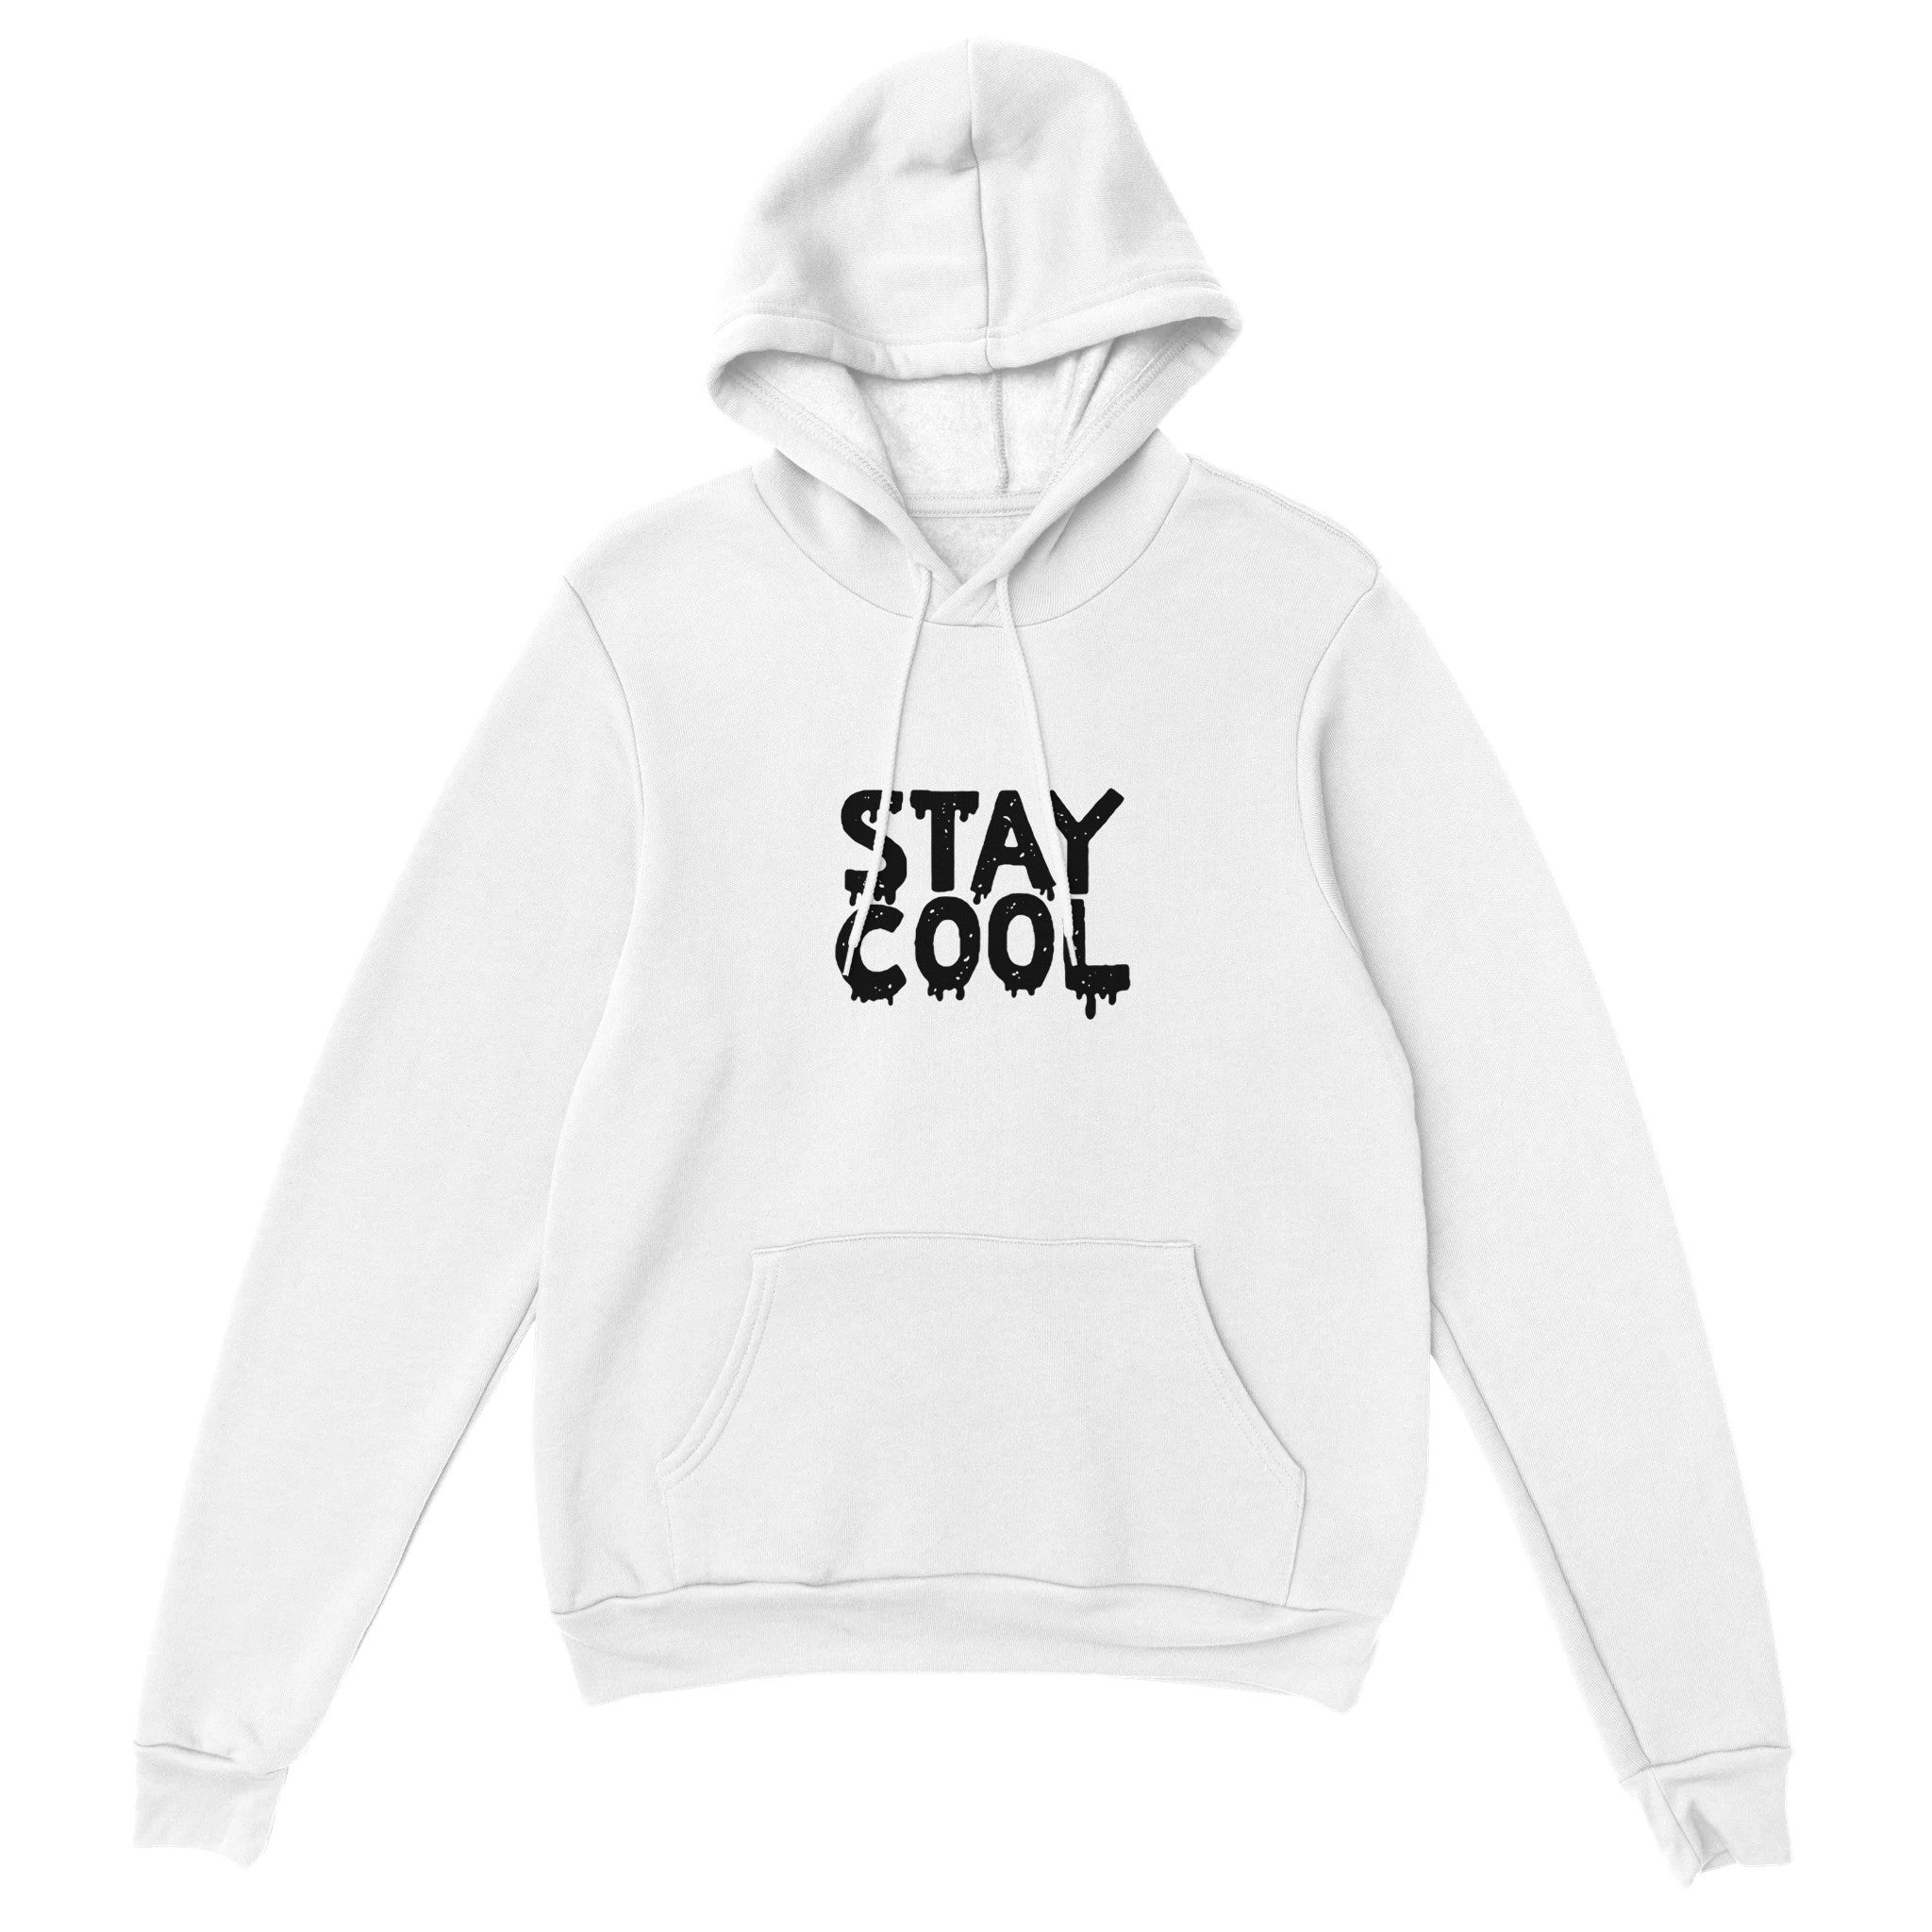 STAY COOL Pullover Hoodie - Optimalprint